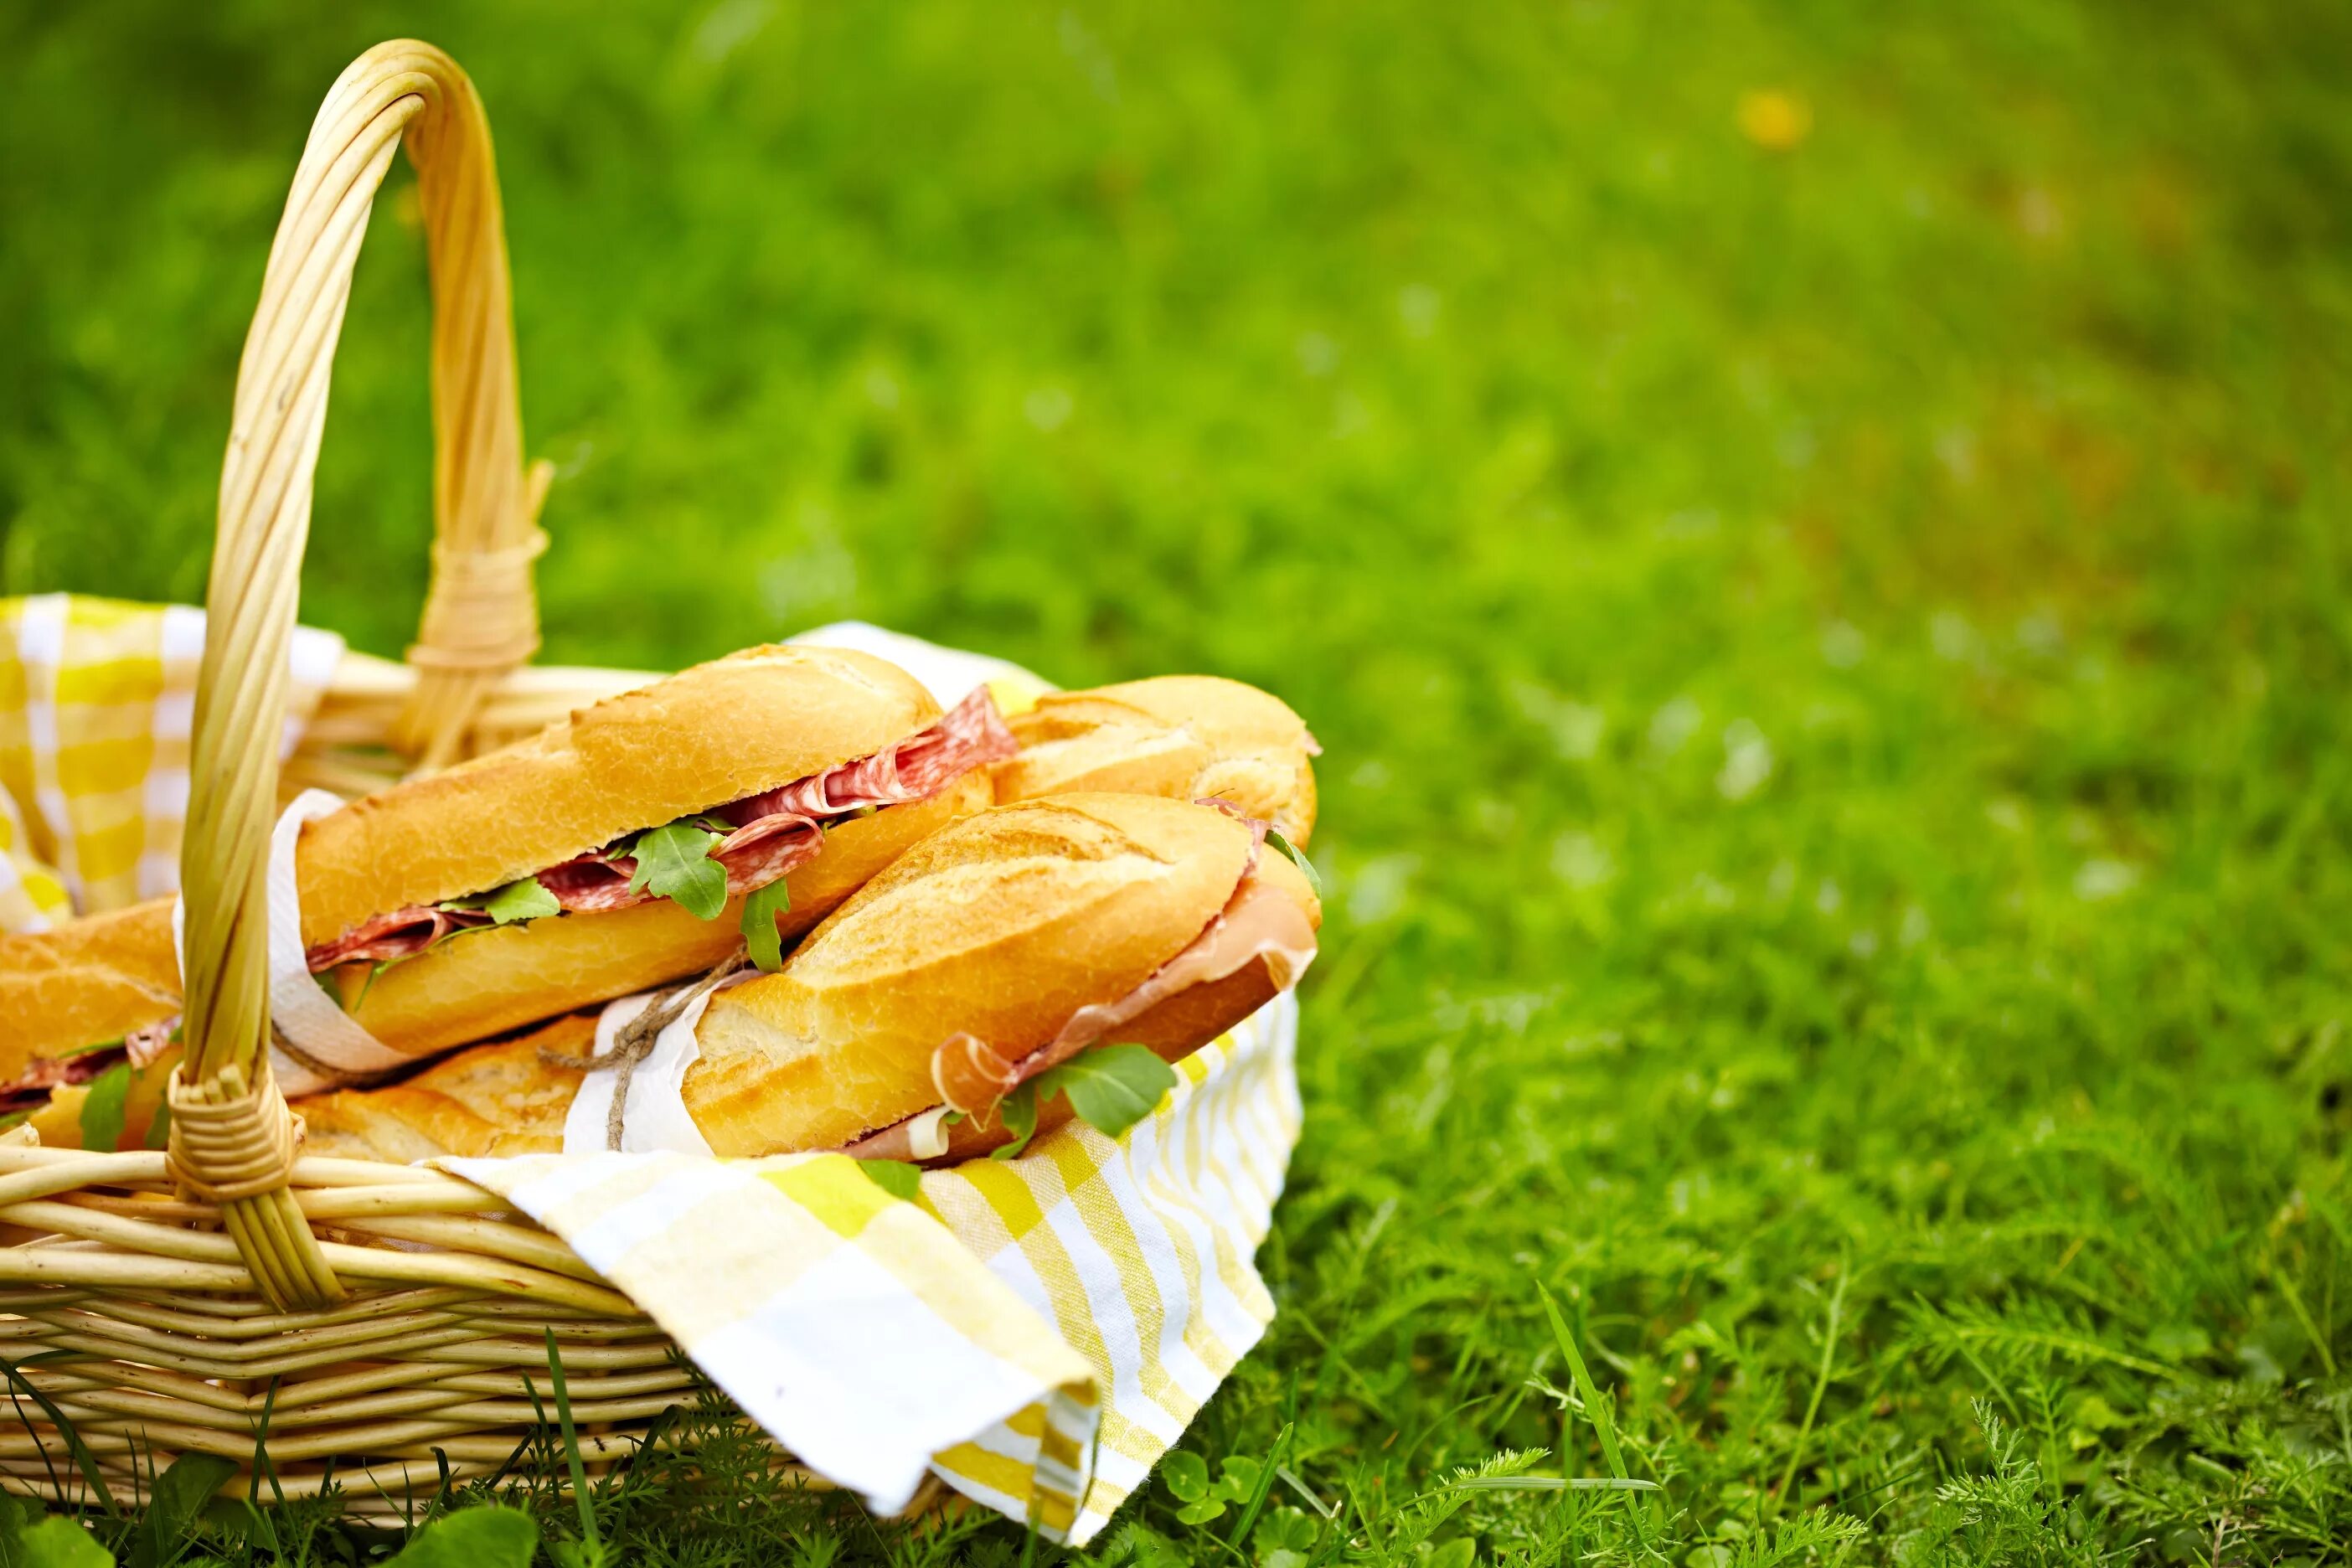 Корзинка для пикника с едой. Корзинка для пикника с продуктами. Пикника природе еда в корзинке. Пикник на природе. Пикник главное